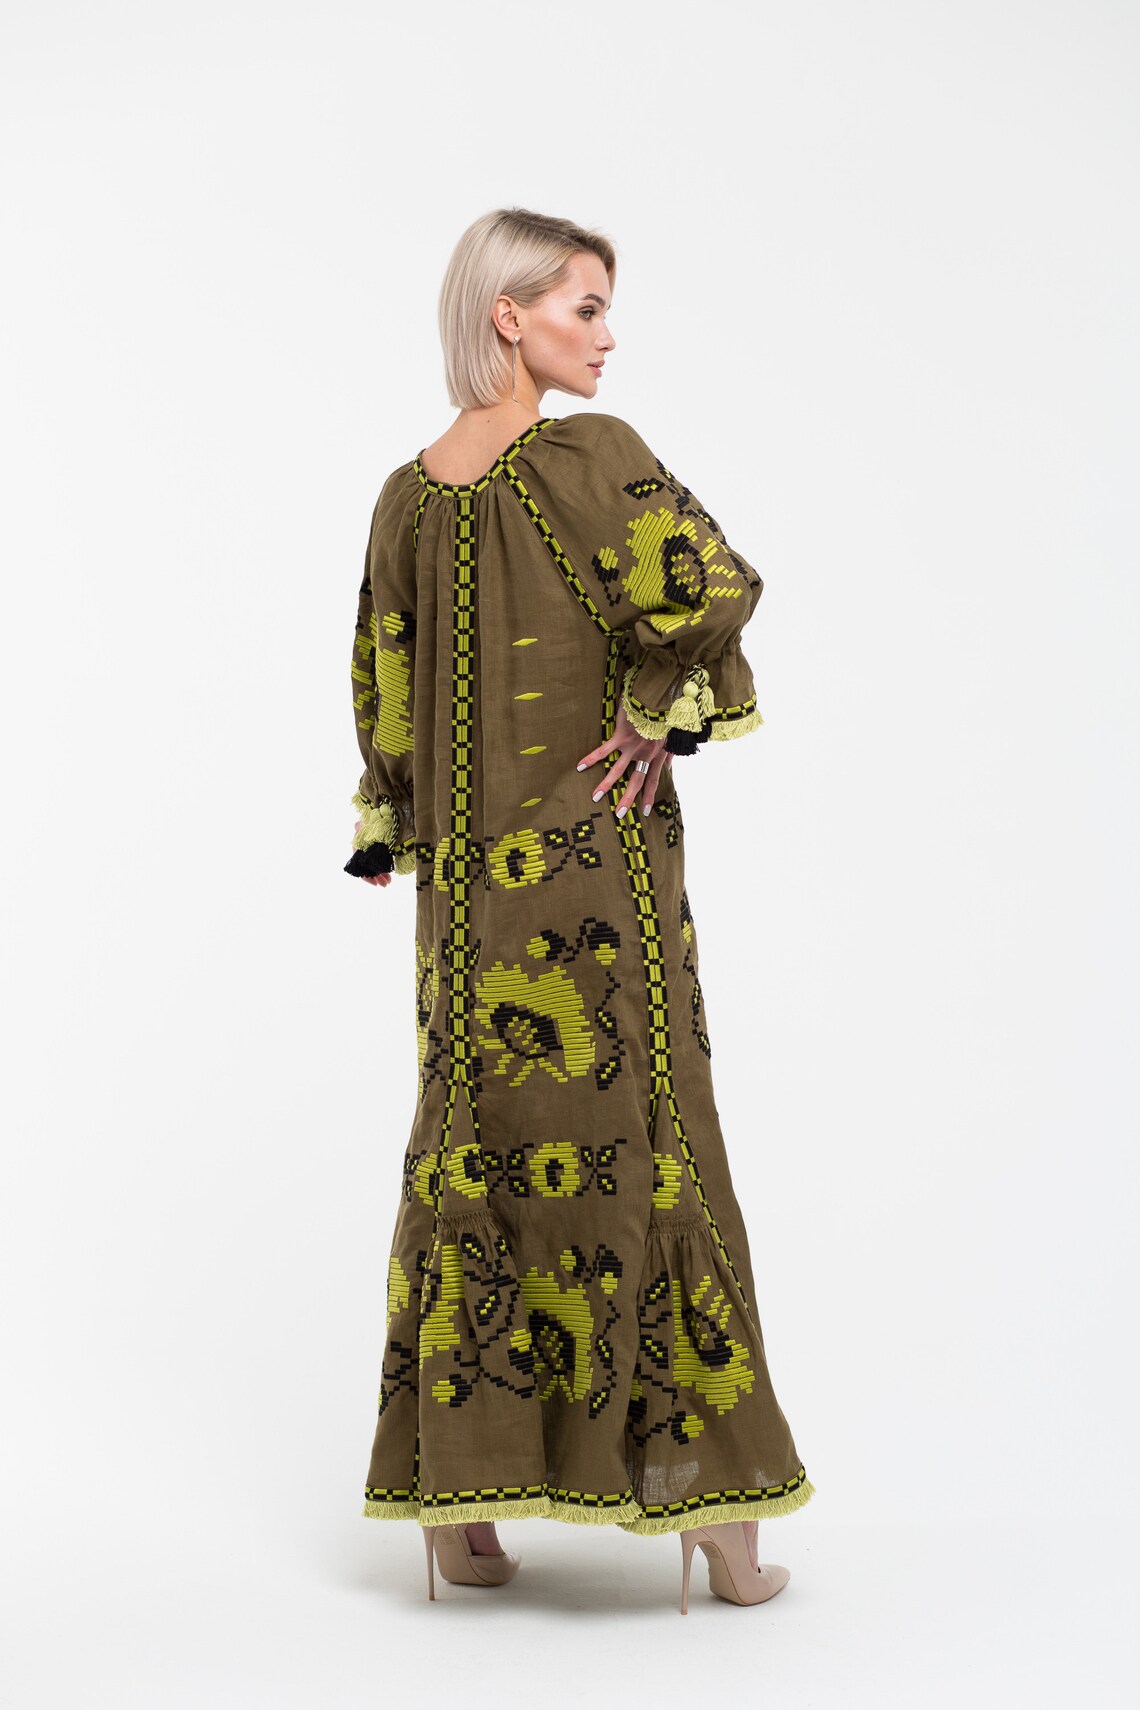 Embroidered olive linen dress kaftan Fashion boho outfit with floral ukraine embroidery Vyshyvanka robe